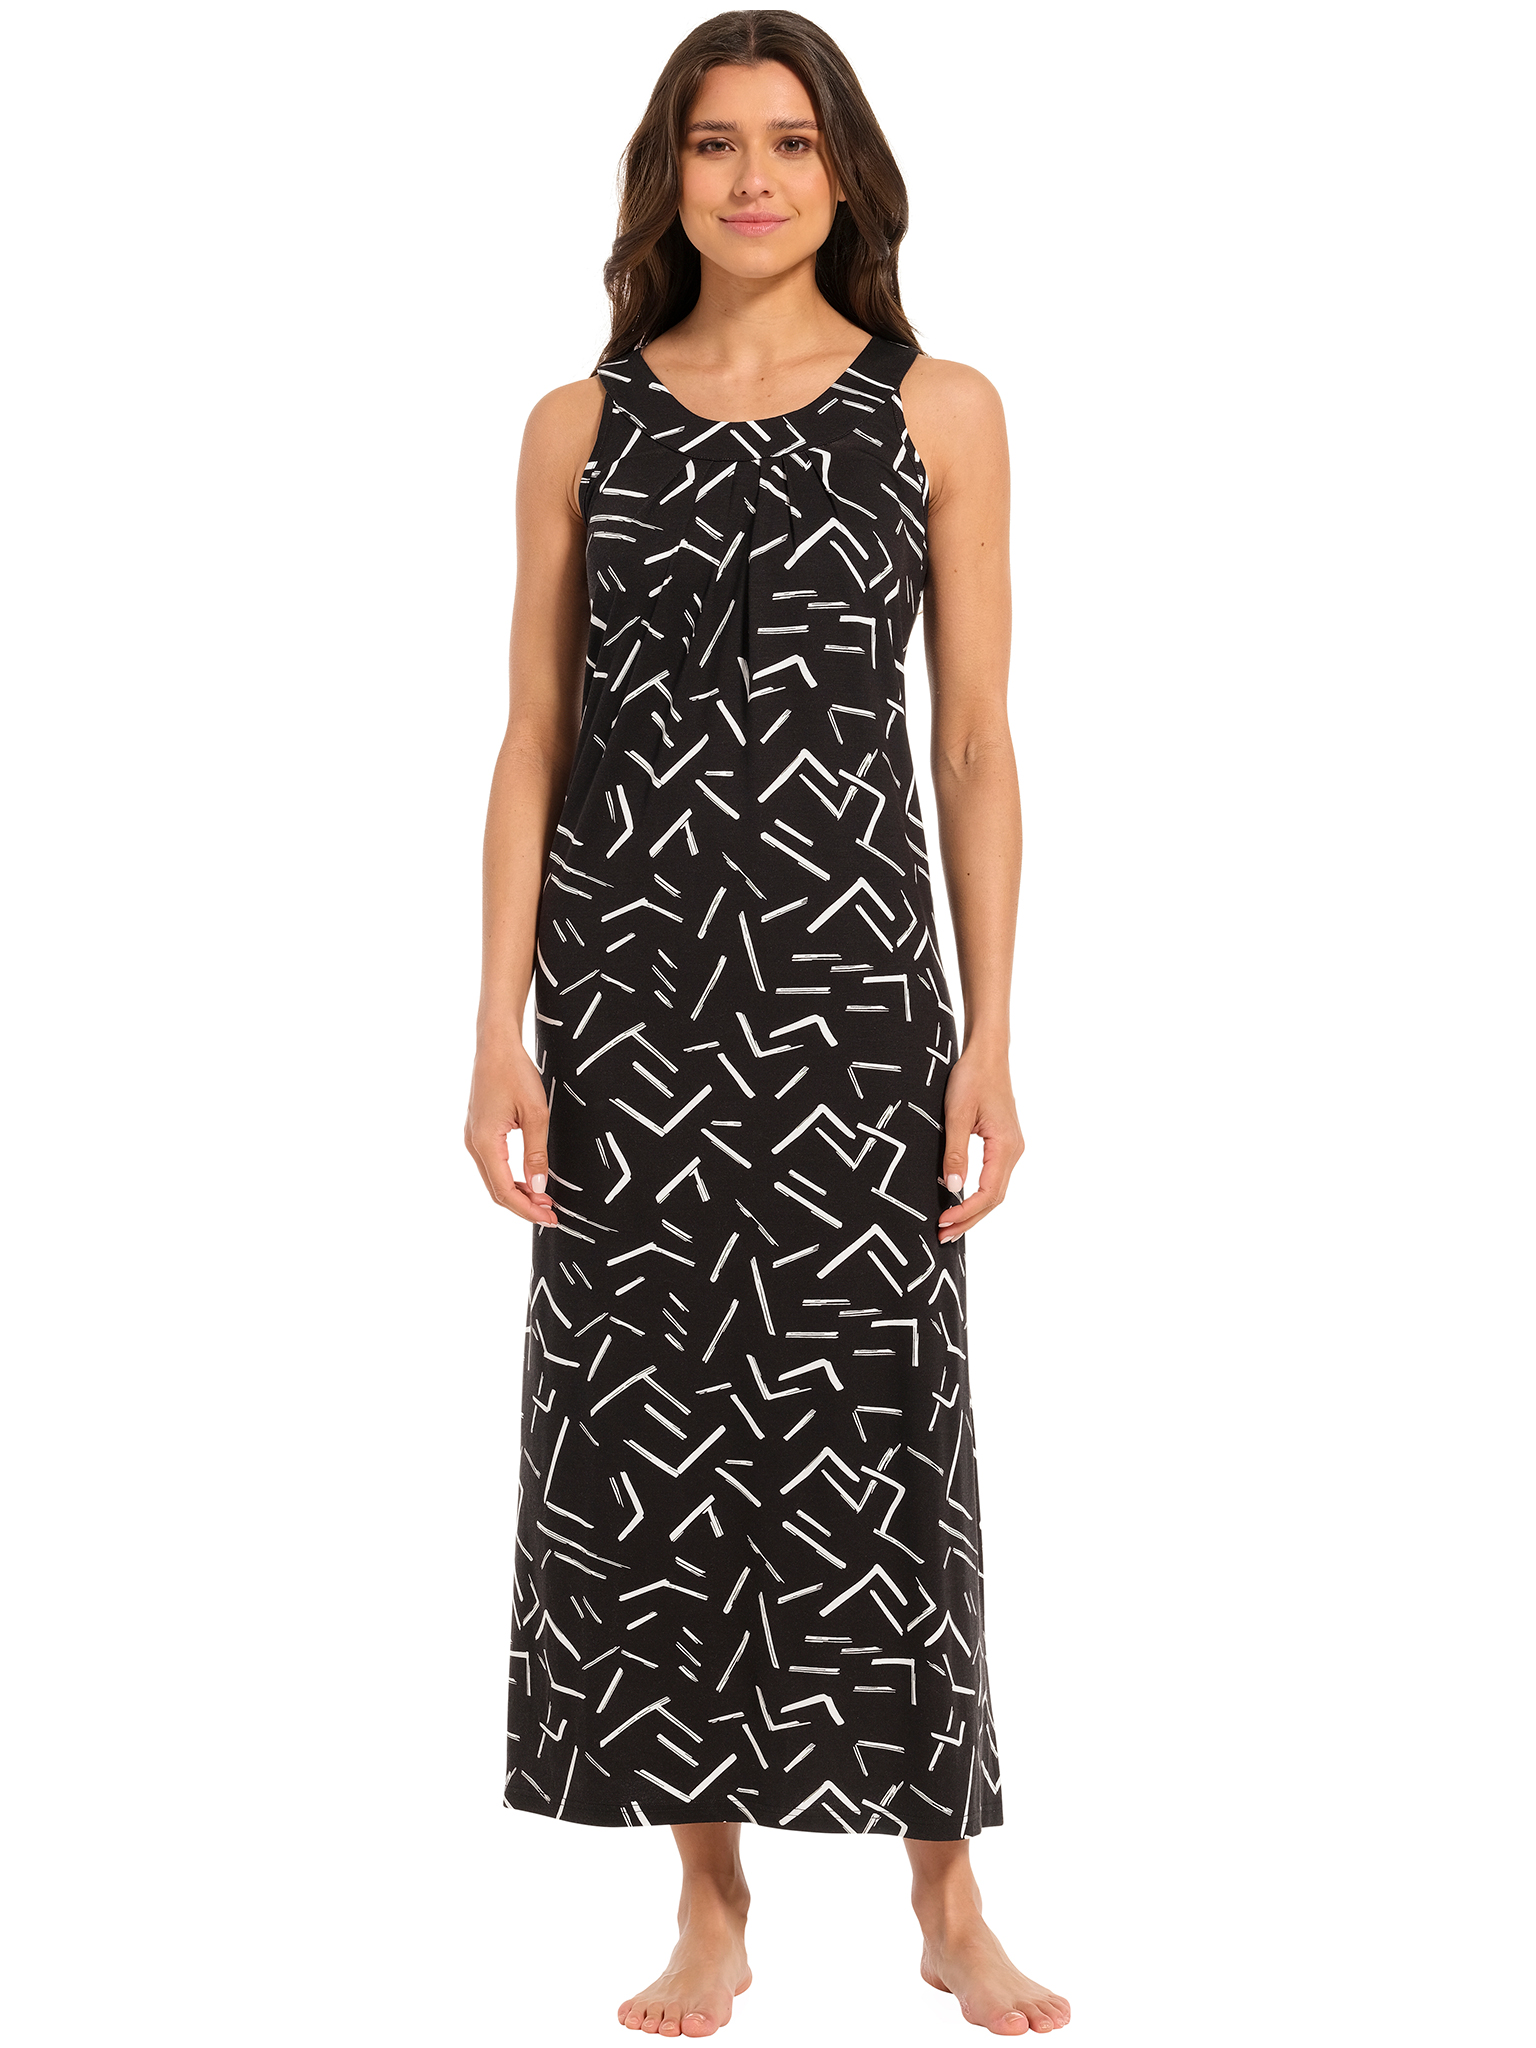 langes Kleid 125 cm black white pastunette